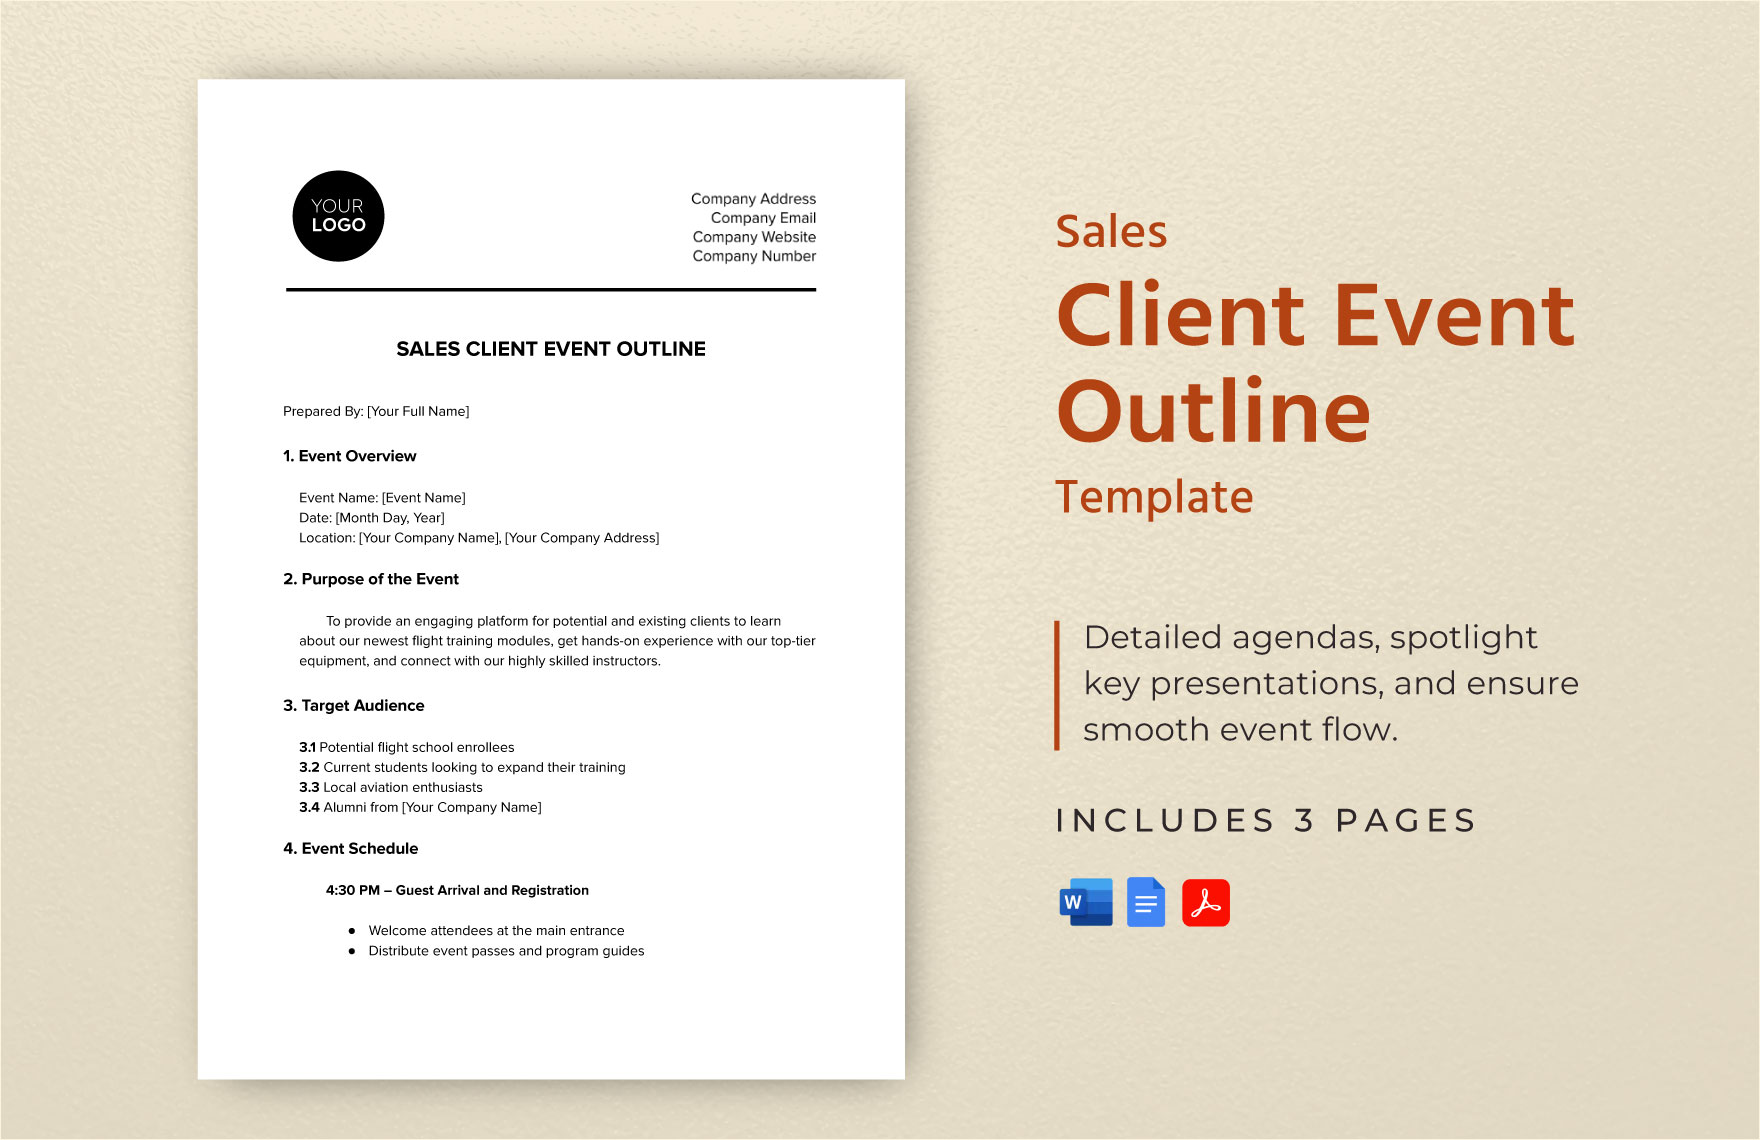 Sales Client Event Outline Template